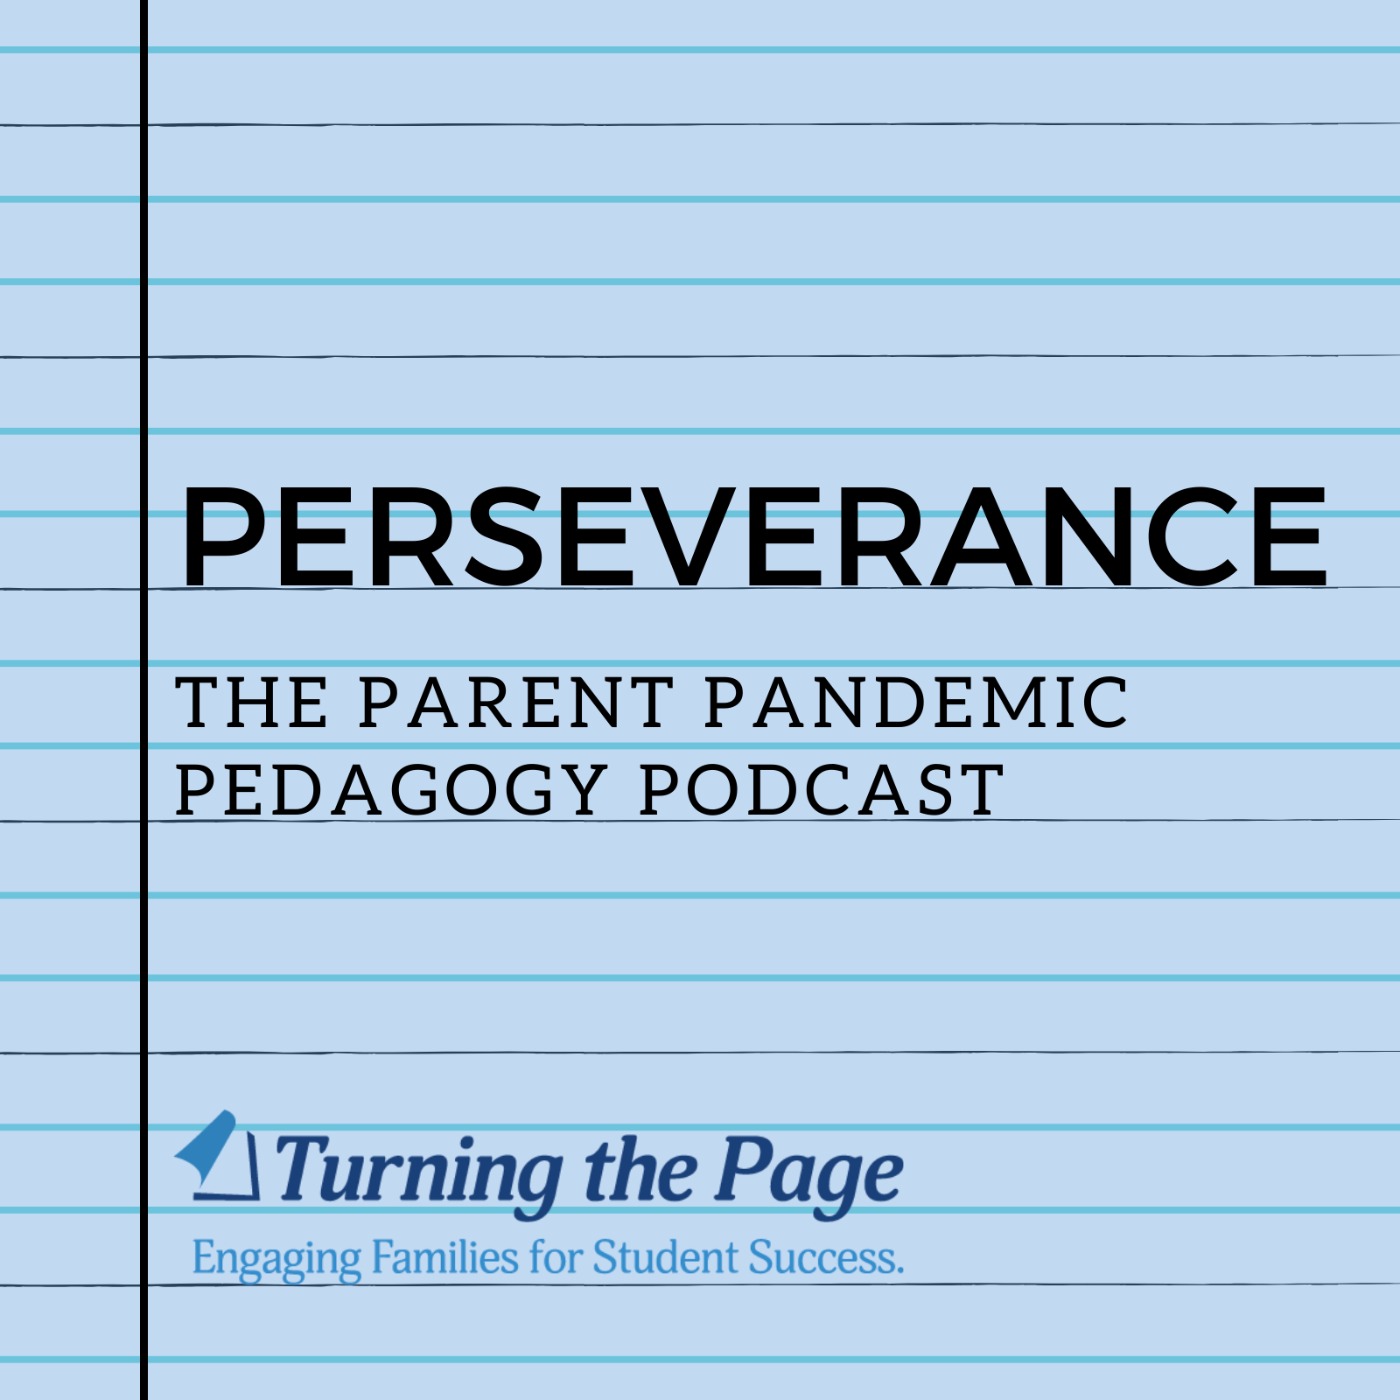 Perseverance: The Parent Pandemic Pedagogy Podcast